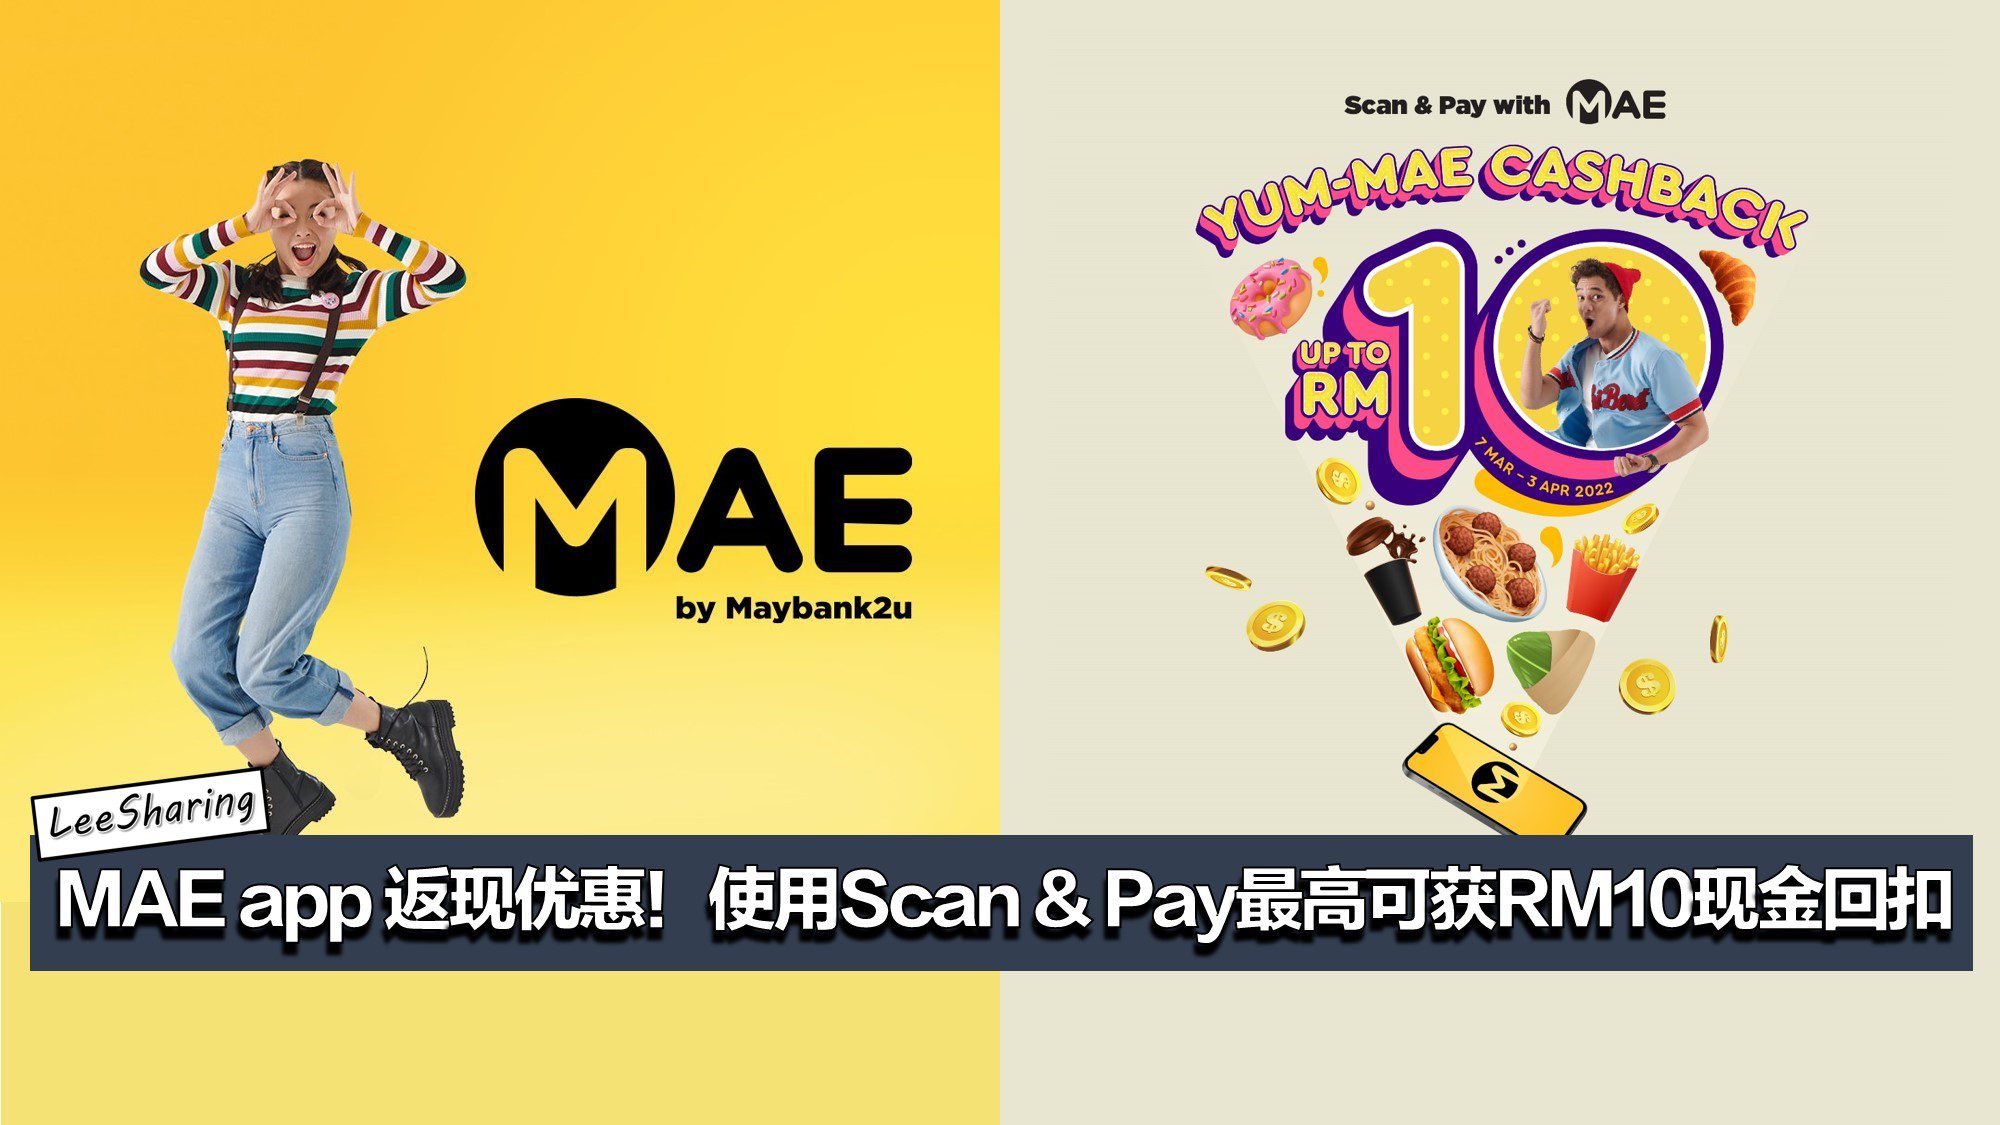 MAE app 推出RM10 現金回扣優惠！Starbucks、Burger King、Tealive等多種選擇，下單滿額即可獲得現金回扣！